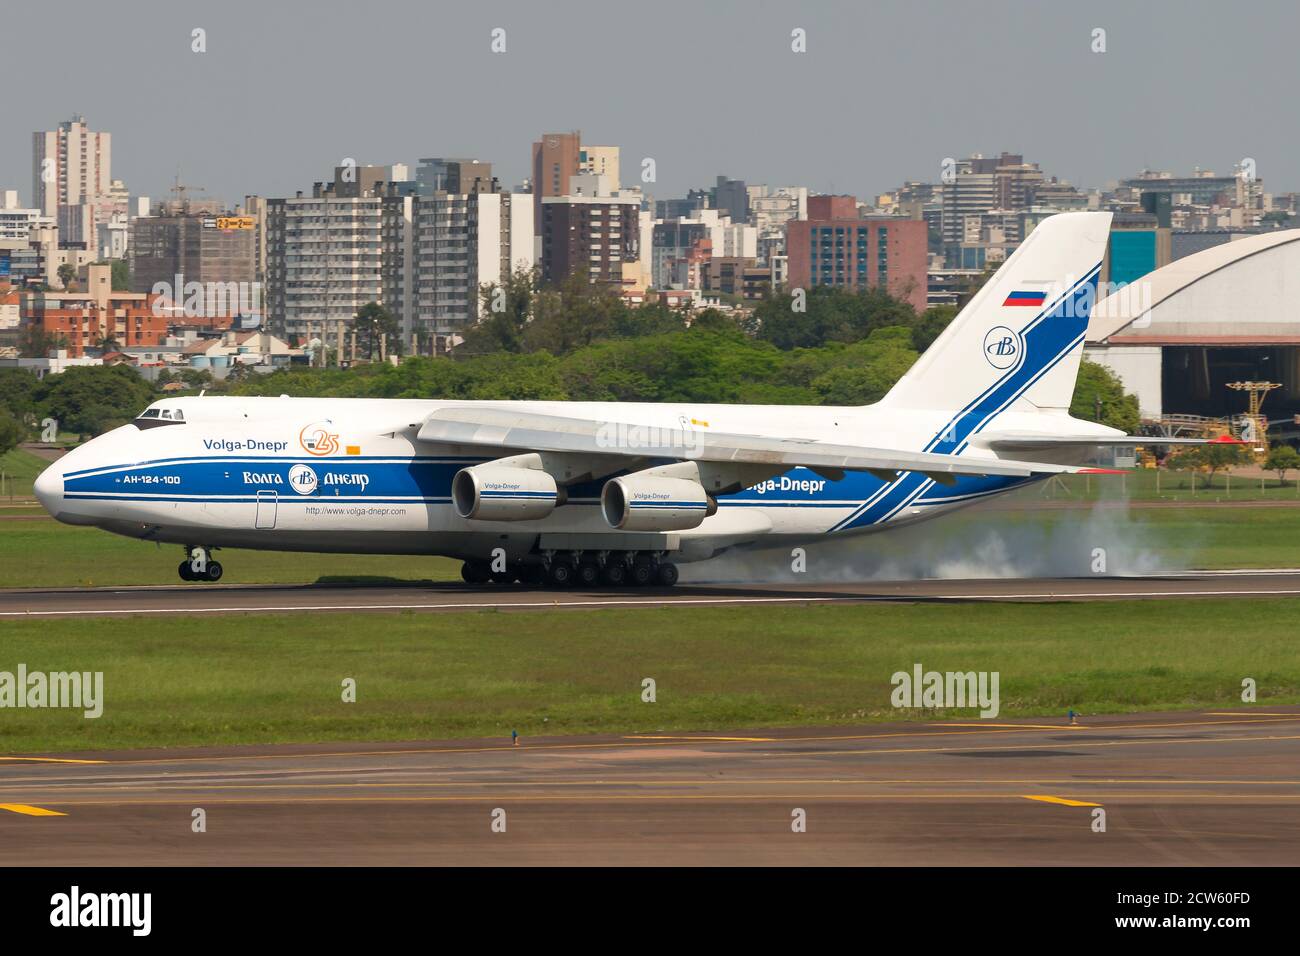 Volga Dnepr Airlines Antonov 124 landing at Porto Alegre Airport, Brazil. Huge cargo aircraft An-124. RA-82047. Russian cargo airline soviet airplane. Stock Photo